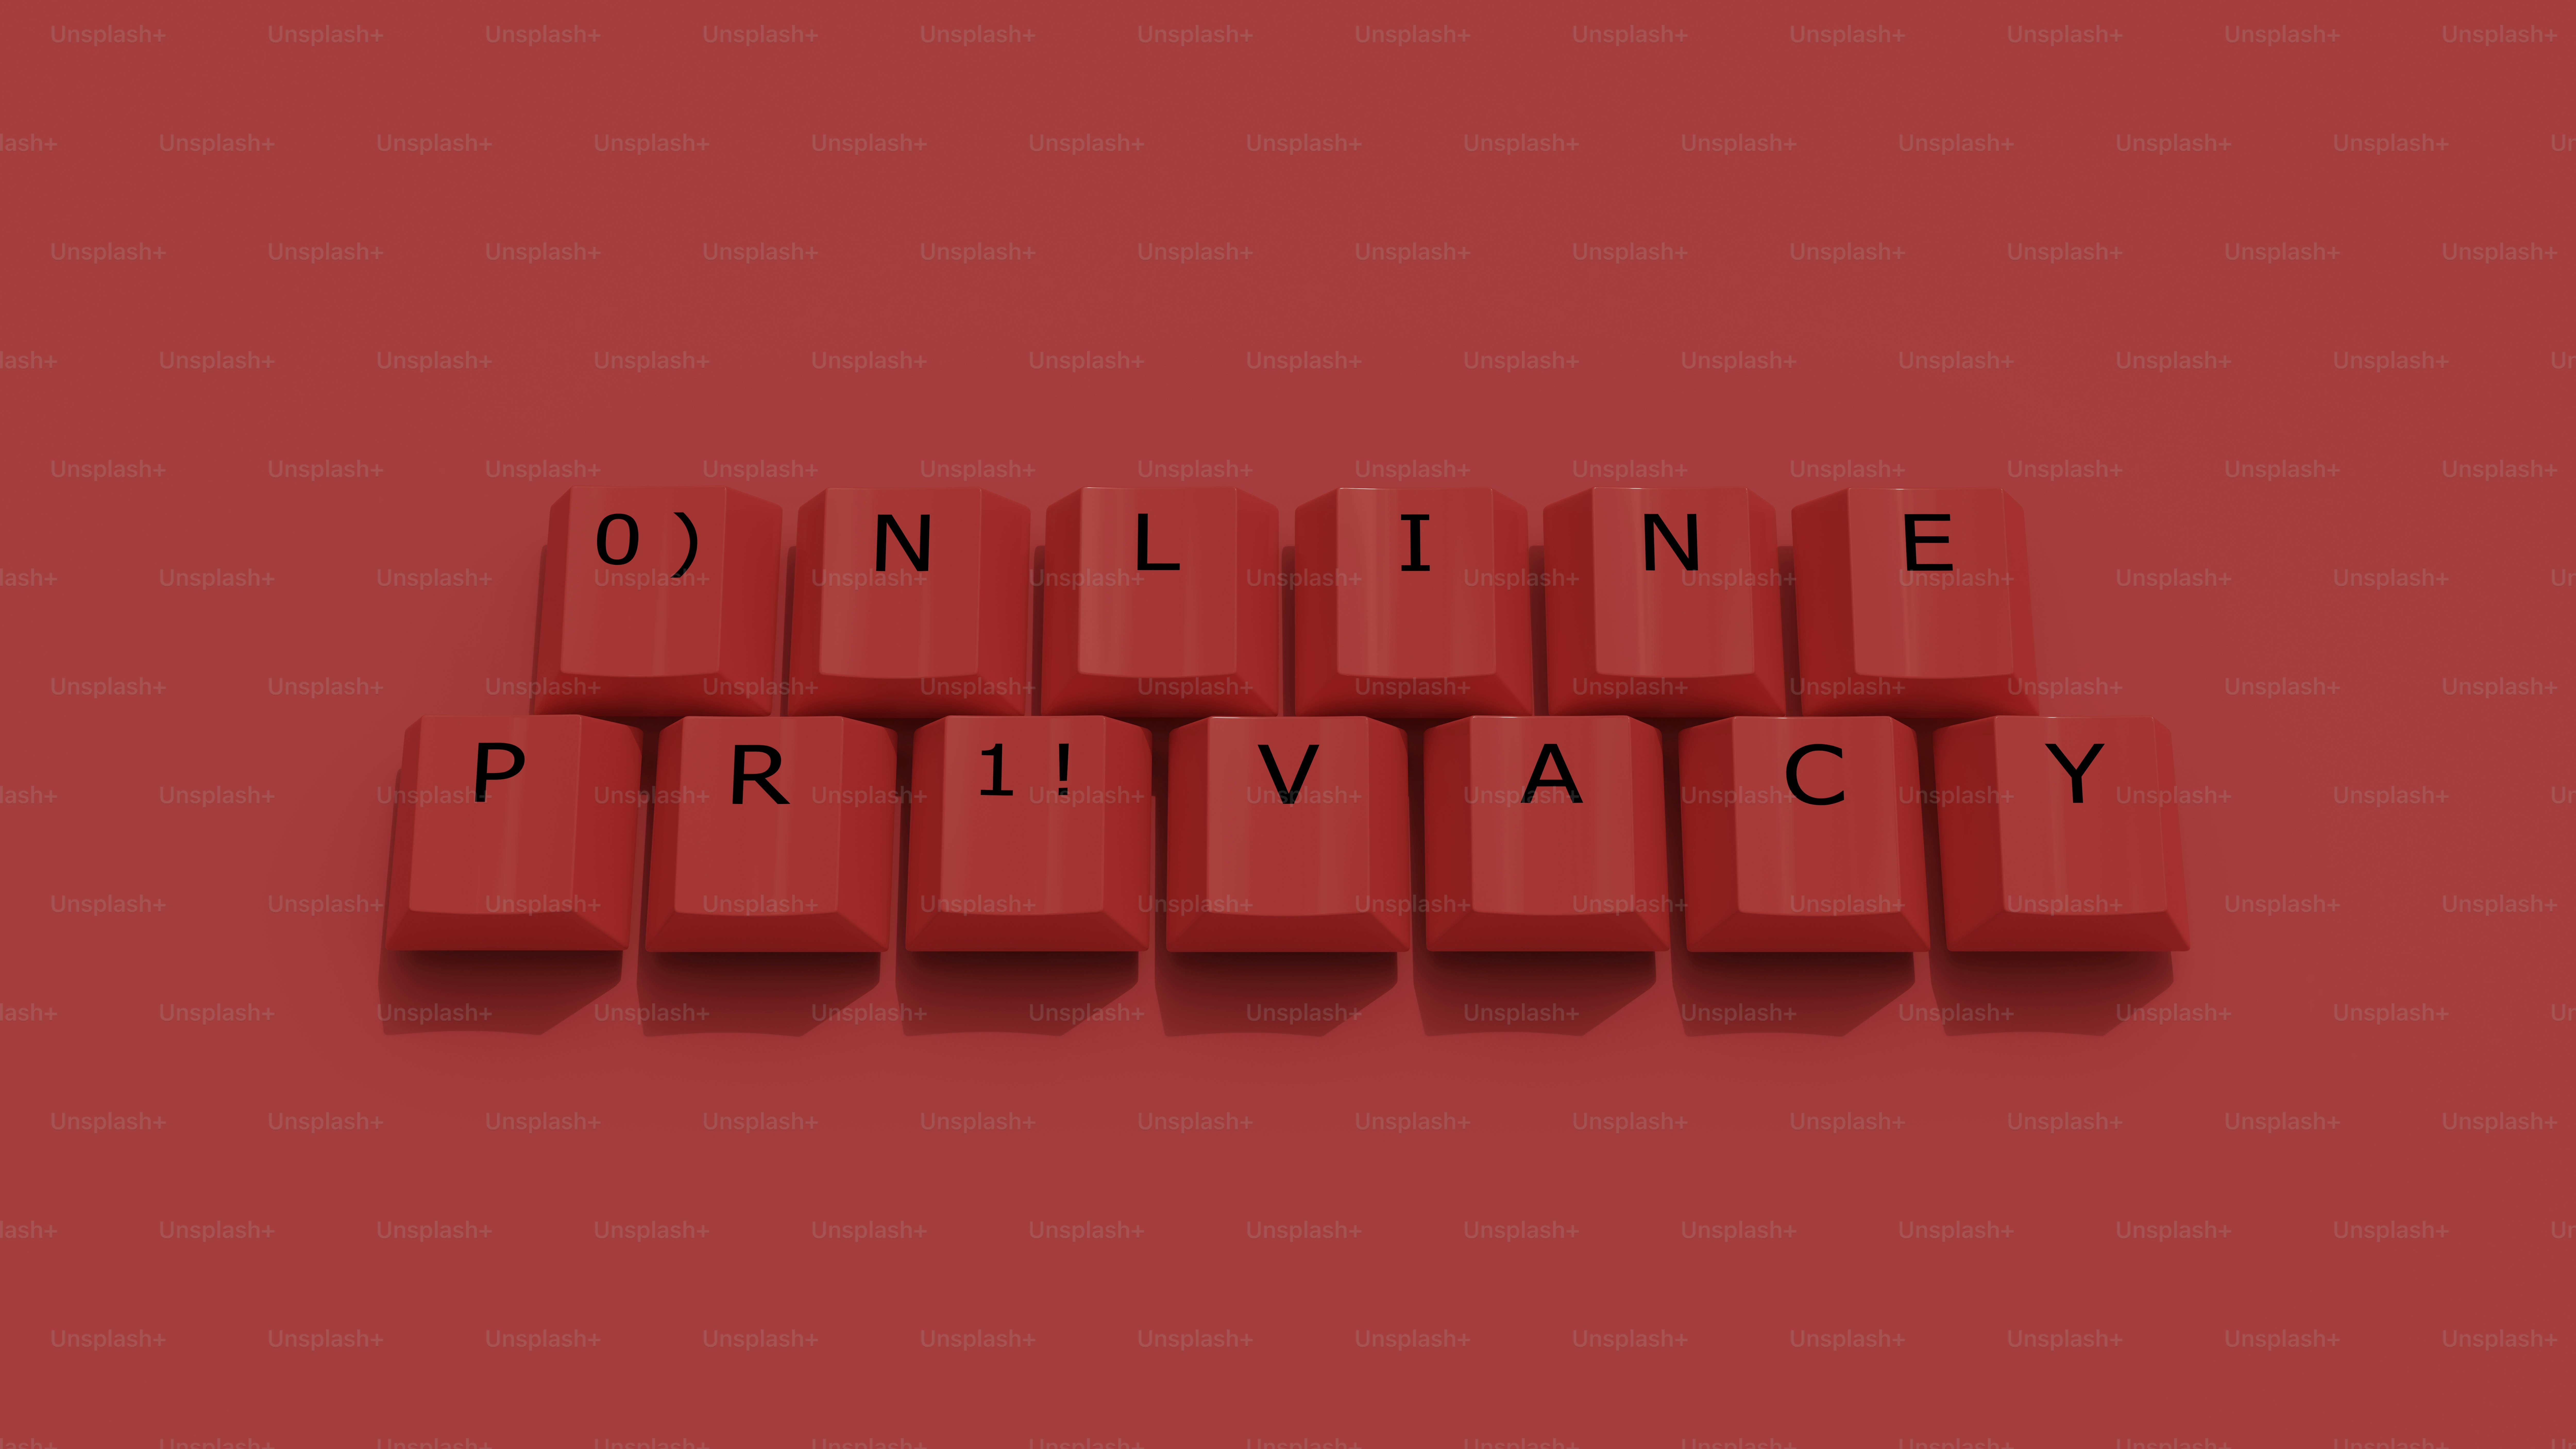 Online privacy keyboard keys text bleached red faded monocoloured Internet slang leet-speak character wording 3d illustration render digital rendering